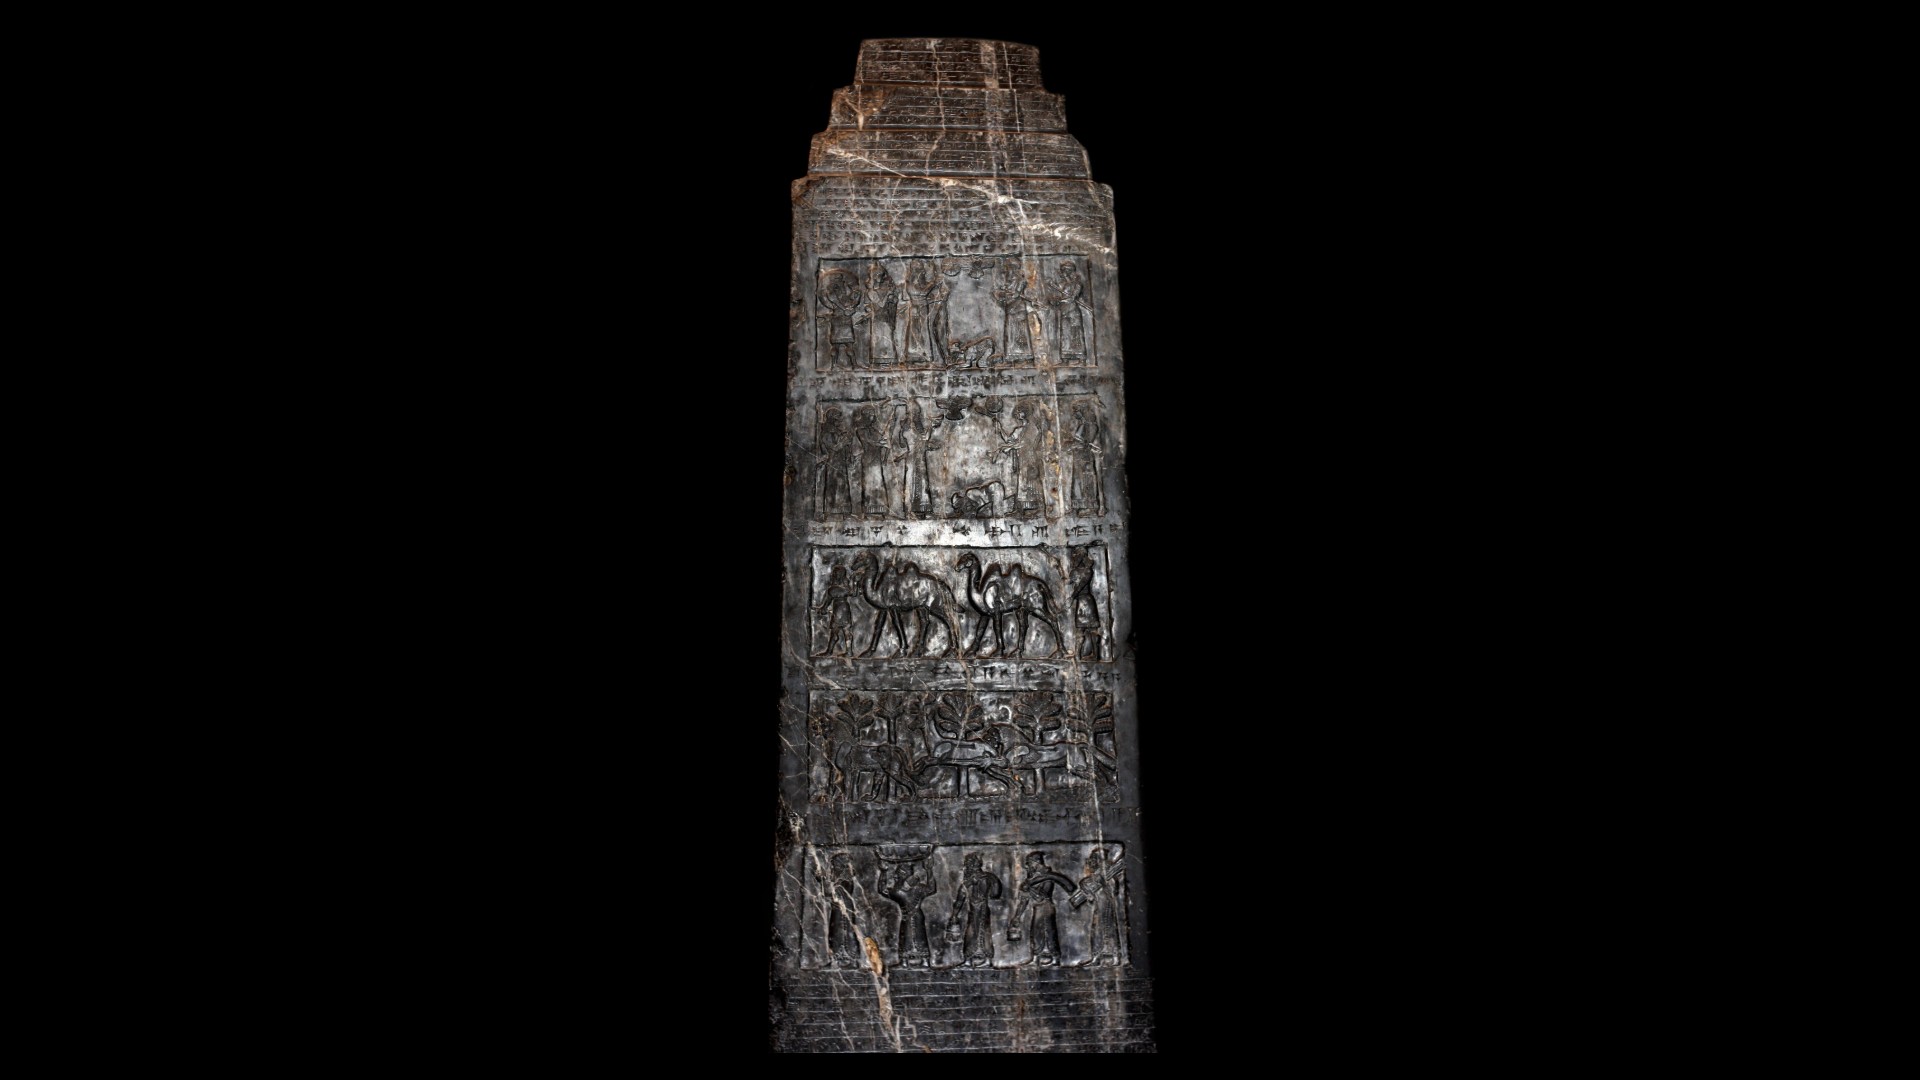 The Black Obelisk of Shalmaneser III (858-824 BC)_Universal History Archive via Getty Images